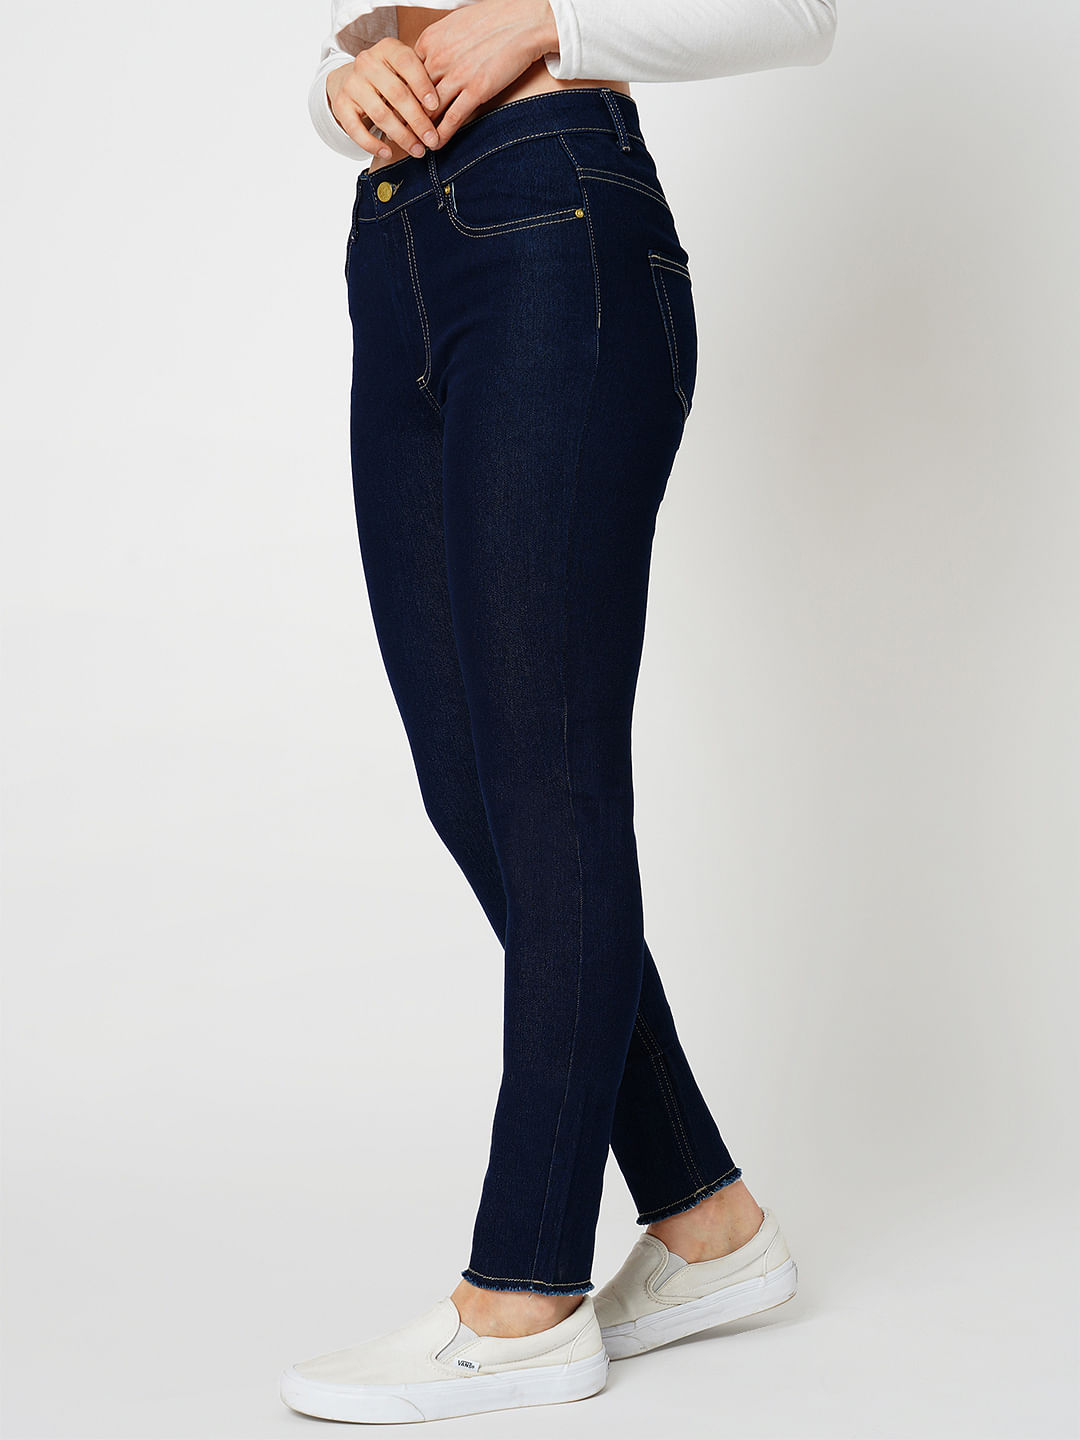 HM Slim Fit Jeans Womens 31 Straight Leg Black Stretch Denim Pant 32x30  RN101255 | eBay